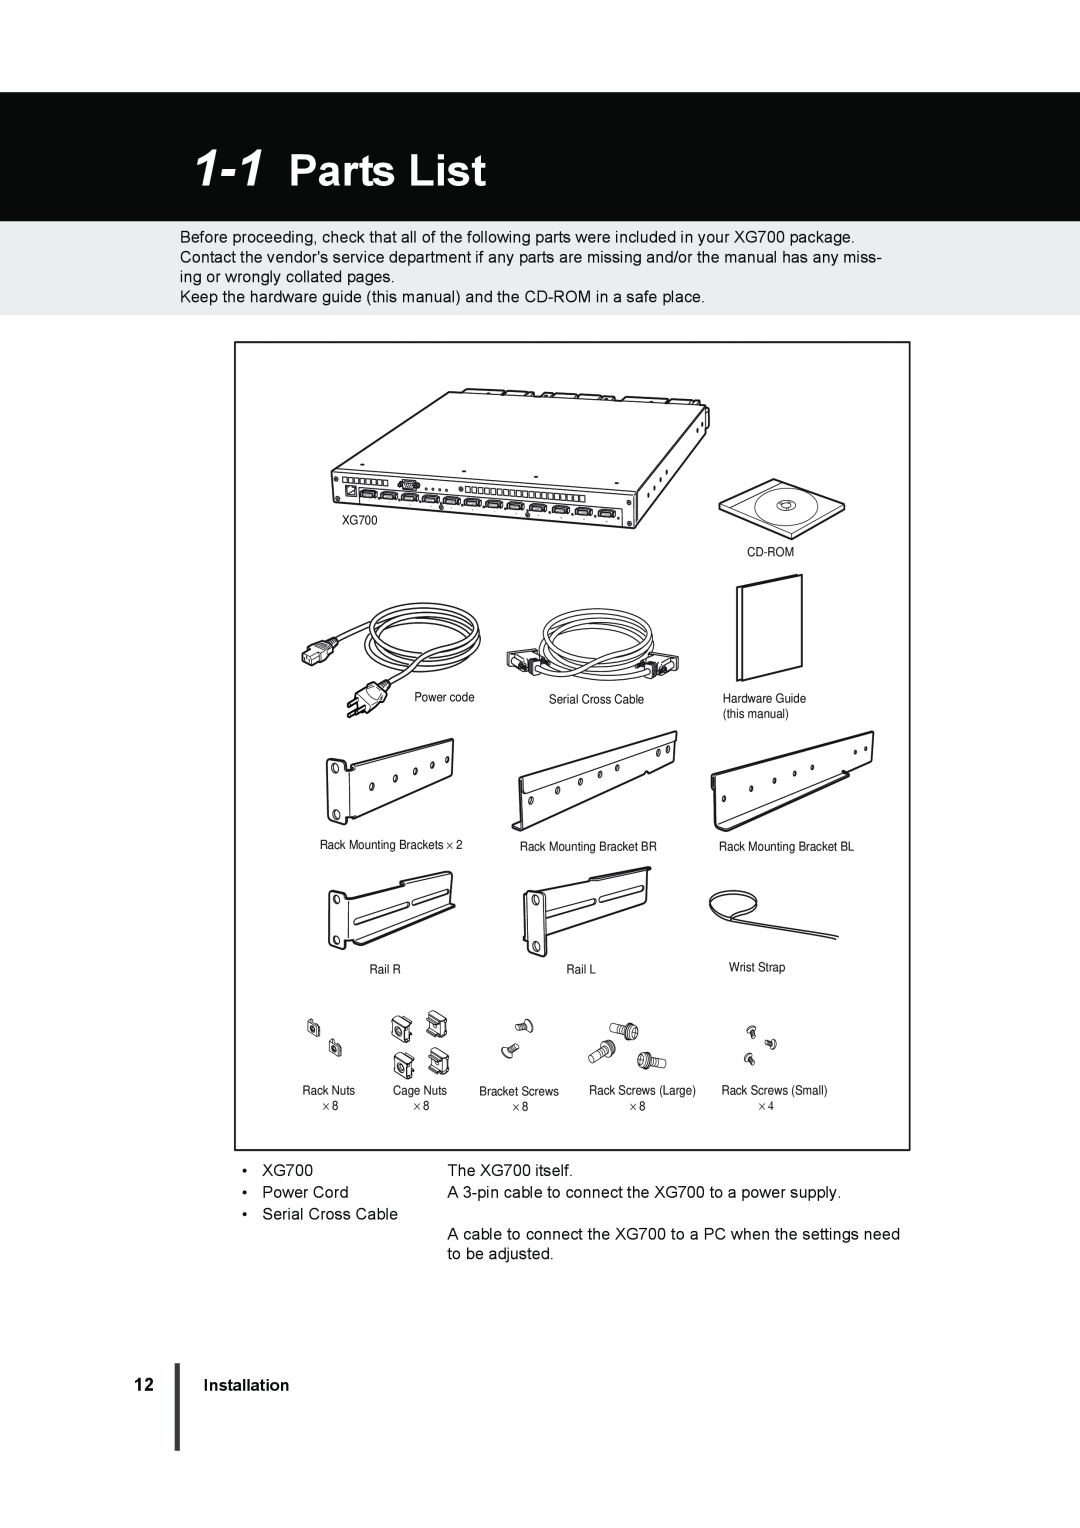 Fujitsu XG700 manual Parts List, Installation 